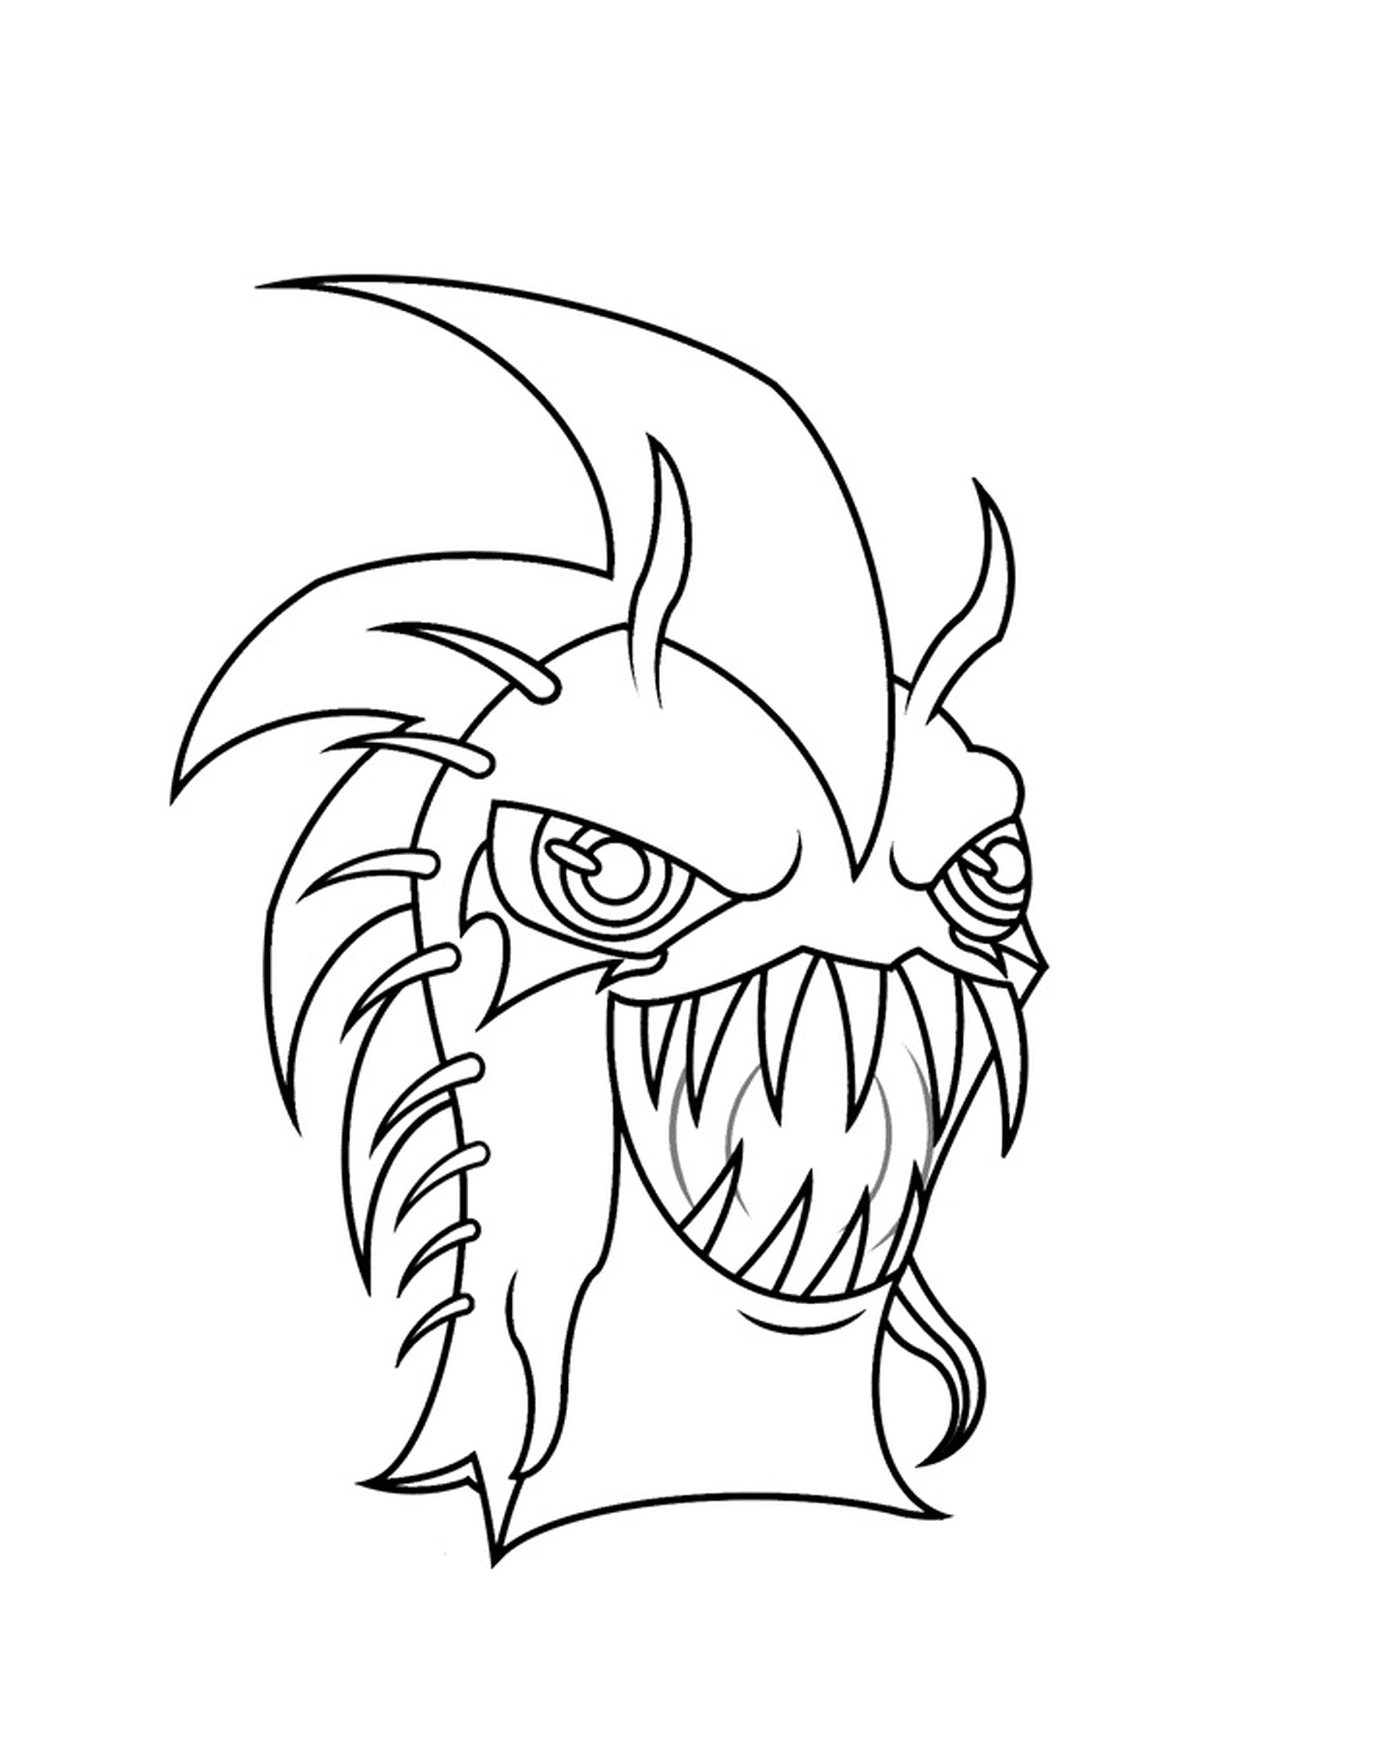   Dark Urchin, monstre avec une grande bouche 